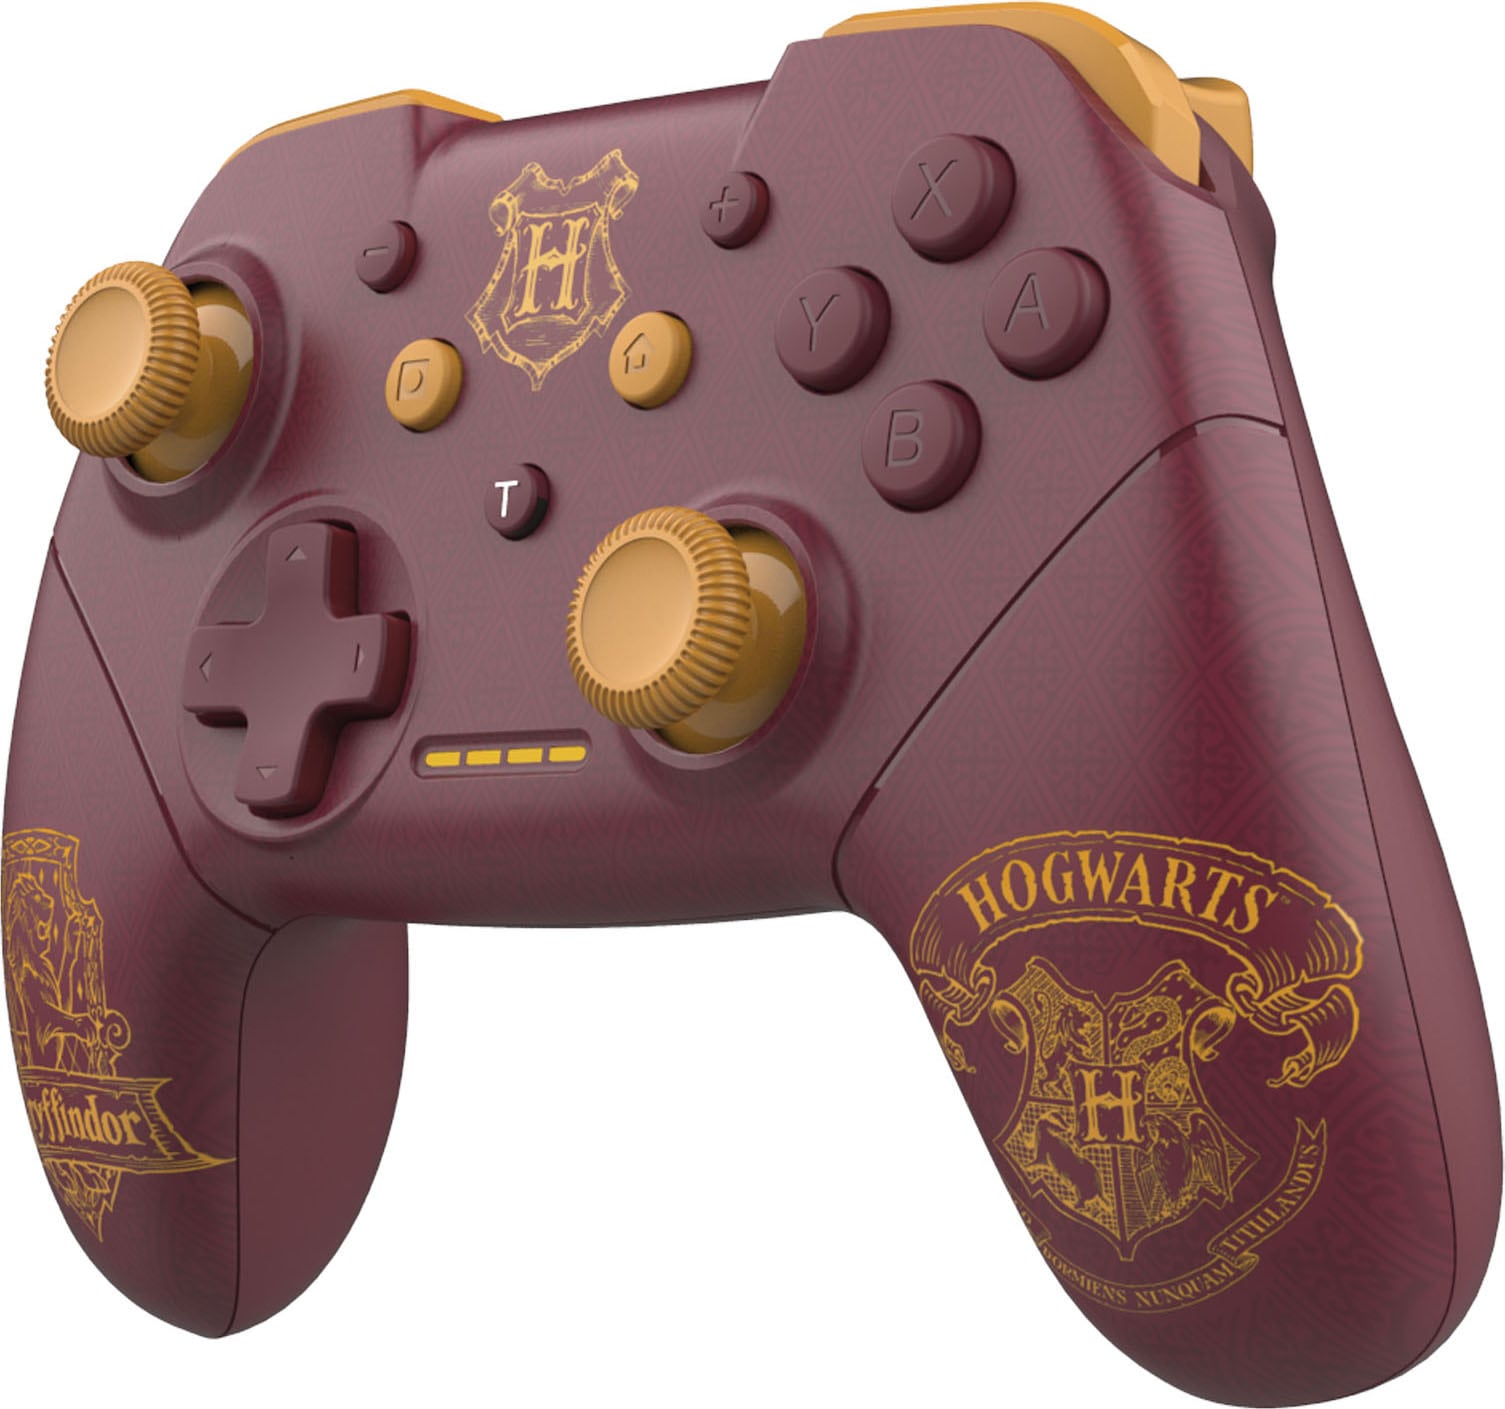 Freaks and Geeks Potter Gryffindor jetzt Wireless« OTTO Nintendo-Controller bestellen bei »Harry